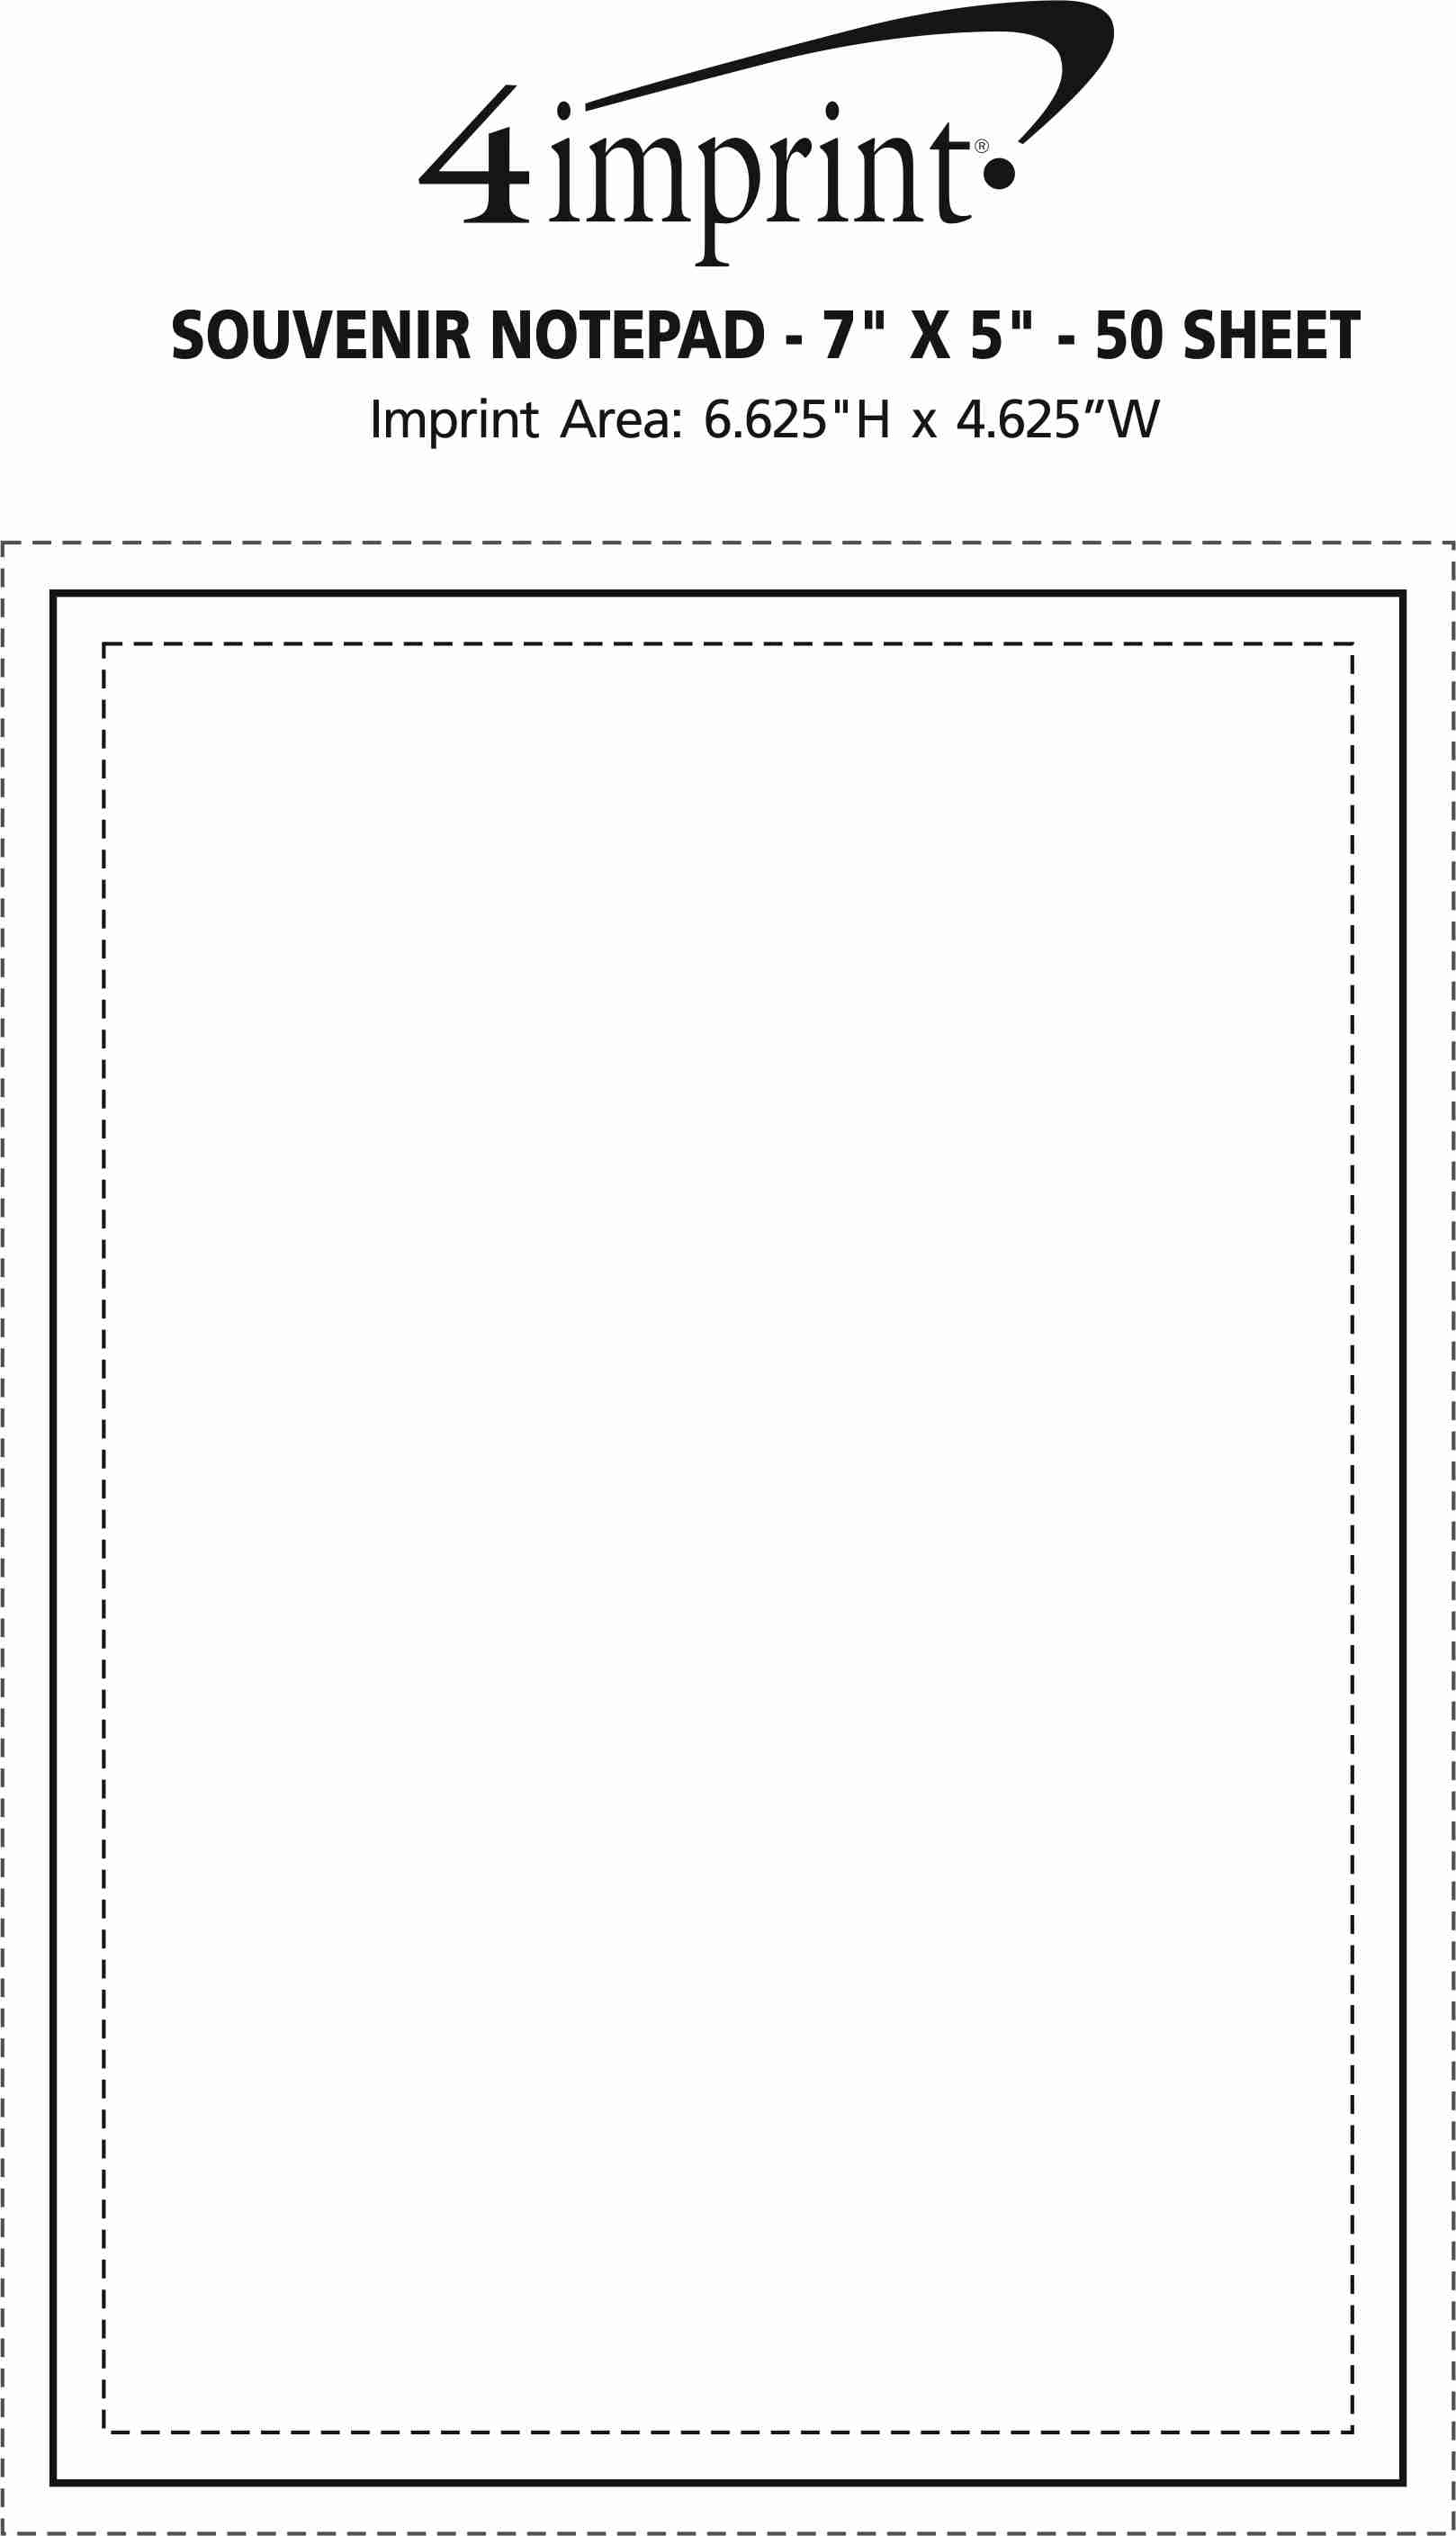 Imprint Area of Souvenir Notepad - 7" x 5" - 50 Sheet